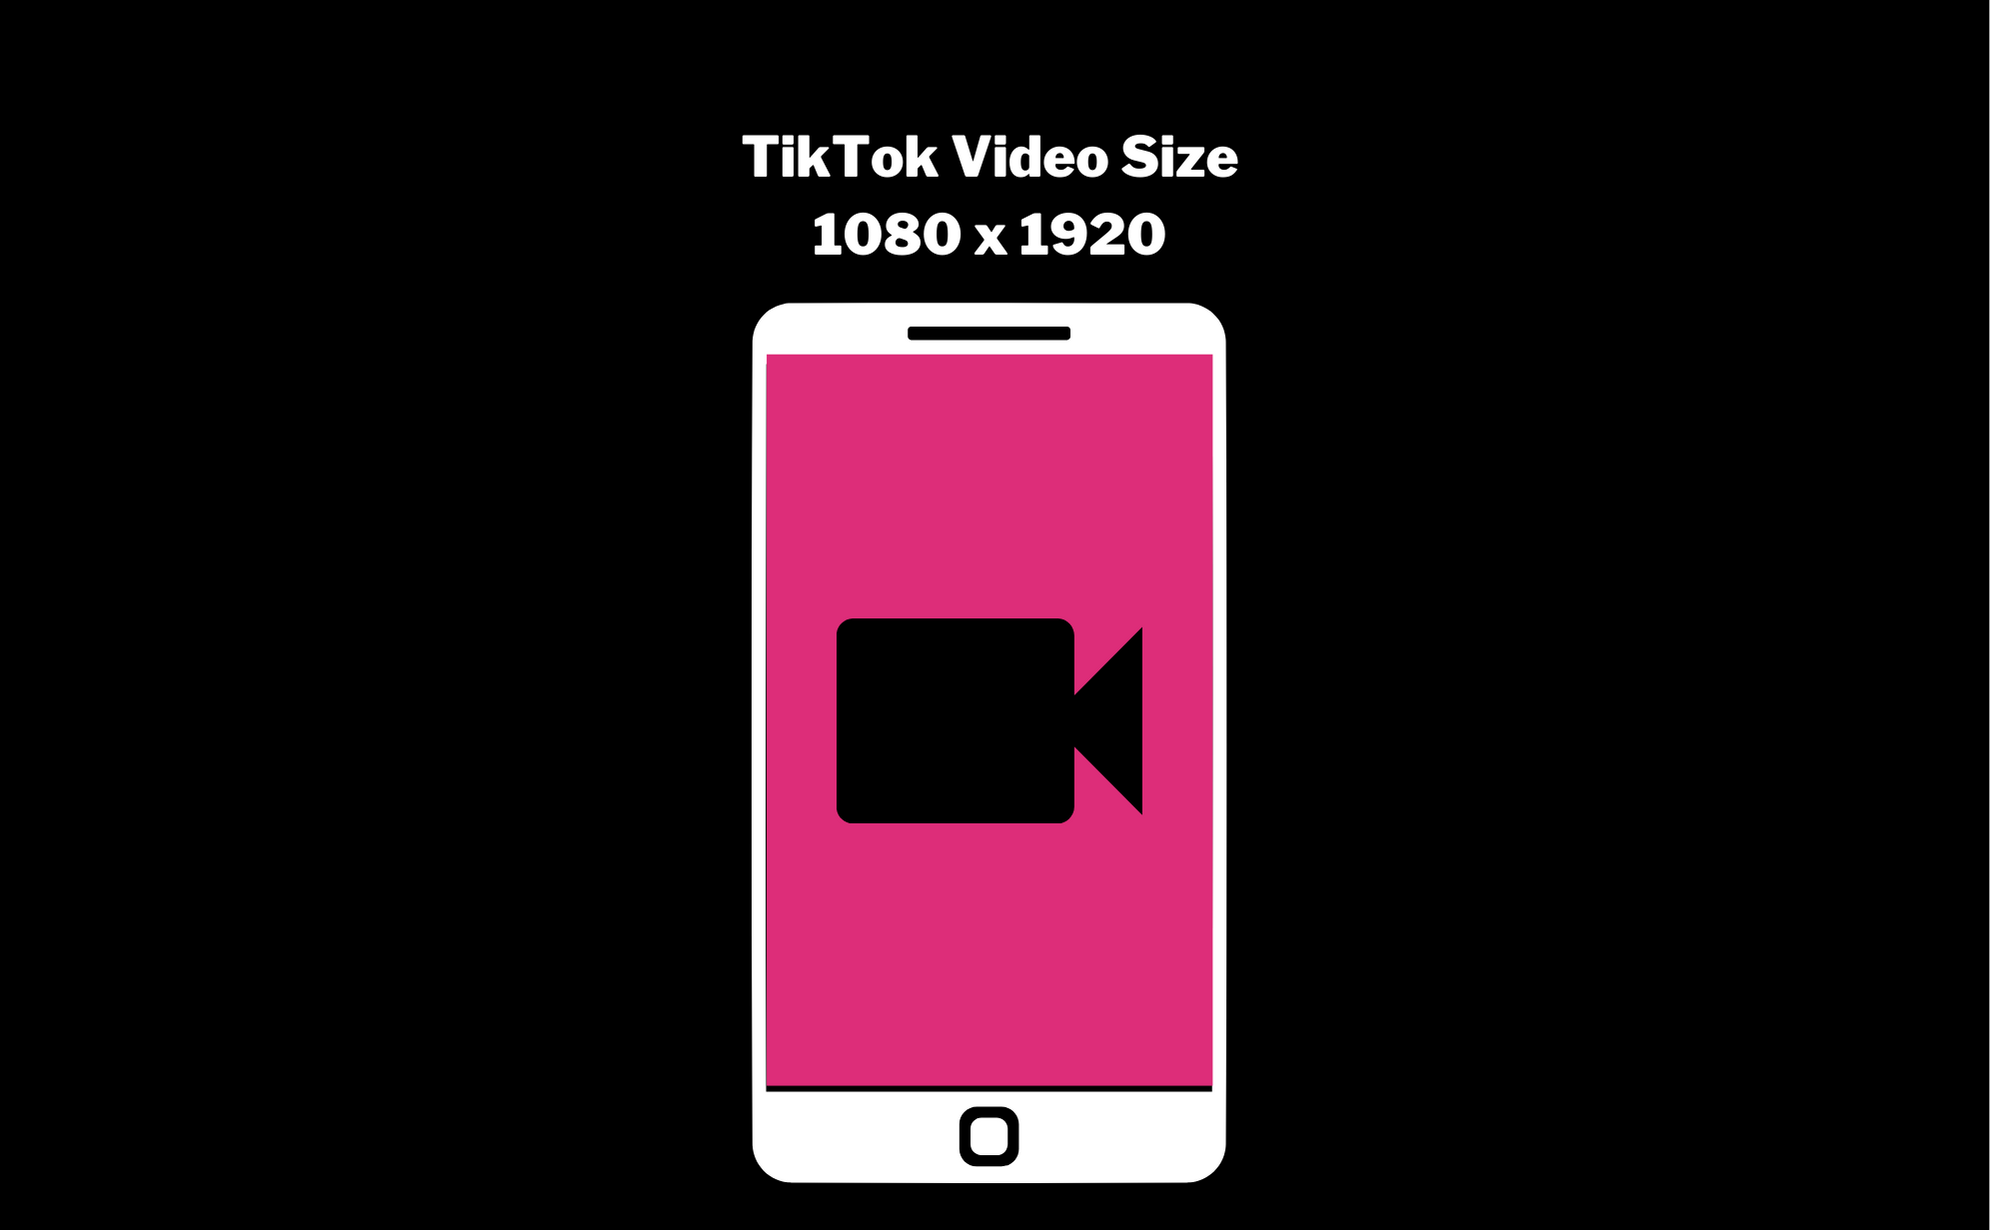 TikTok Size Guide: Create Engaging Videos That Fit the TikTok Aspect Ratio